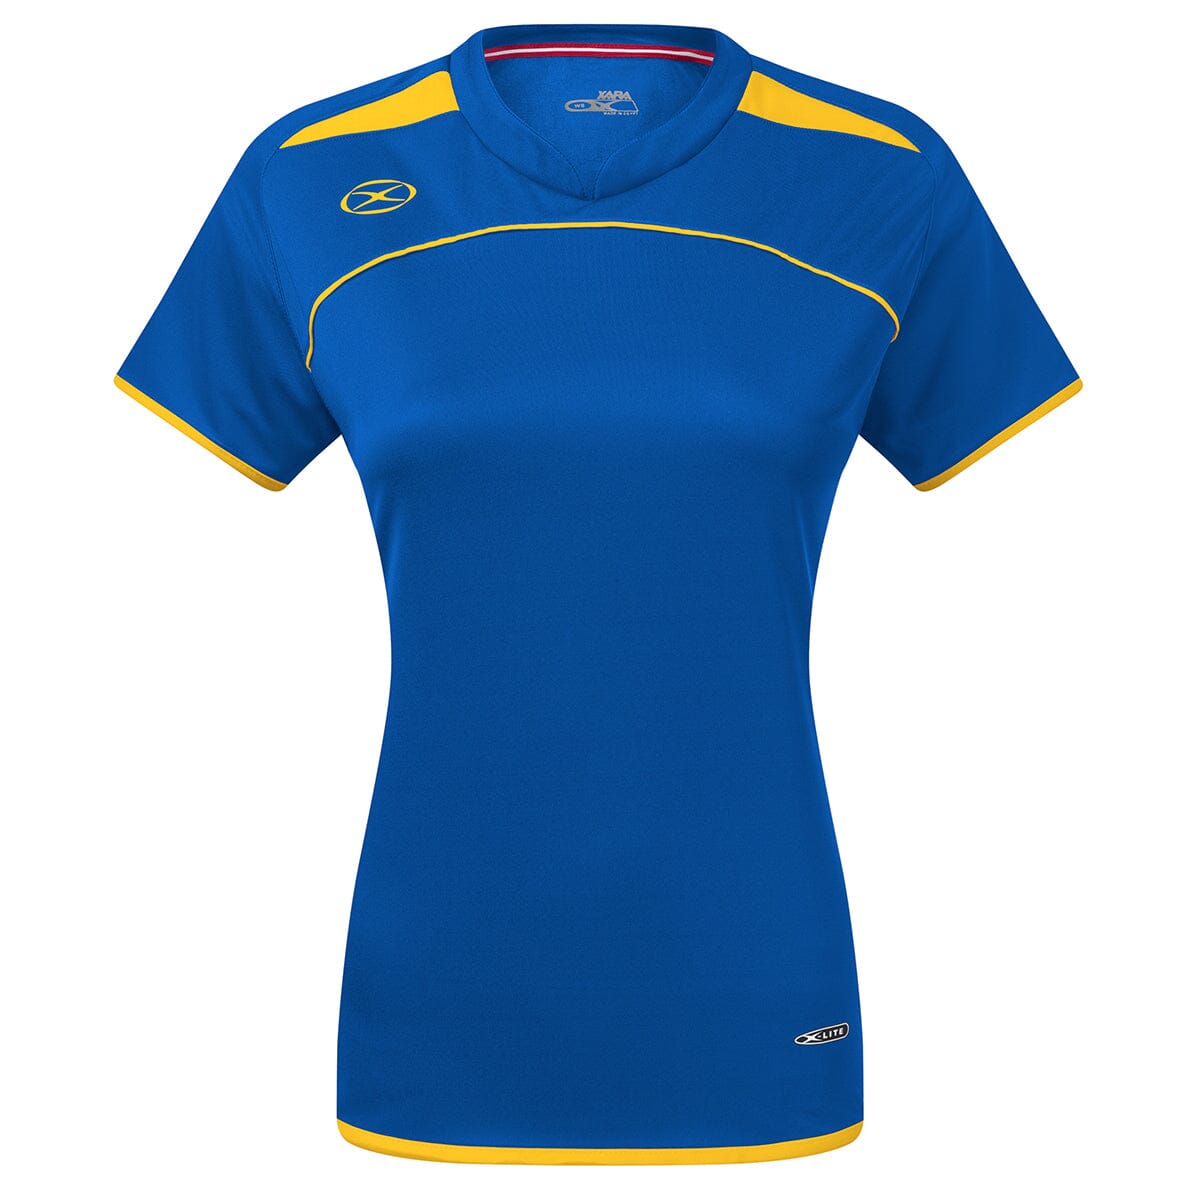 Cardiff Jersey - Female Shirt Xara Soccer Royal/Gold Womens Youth Small 